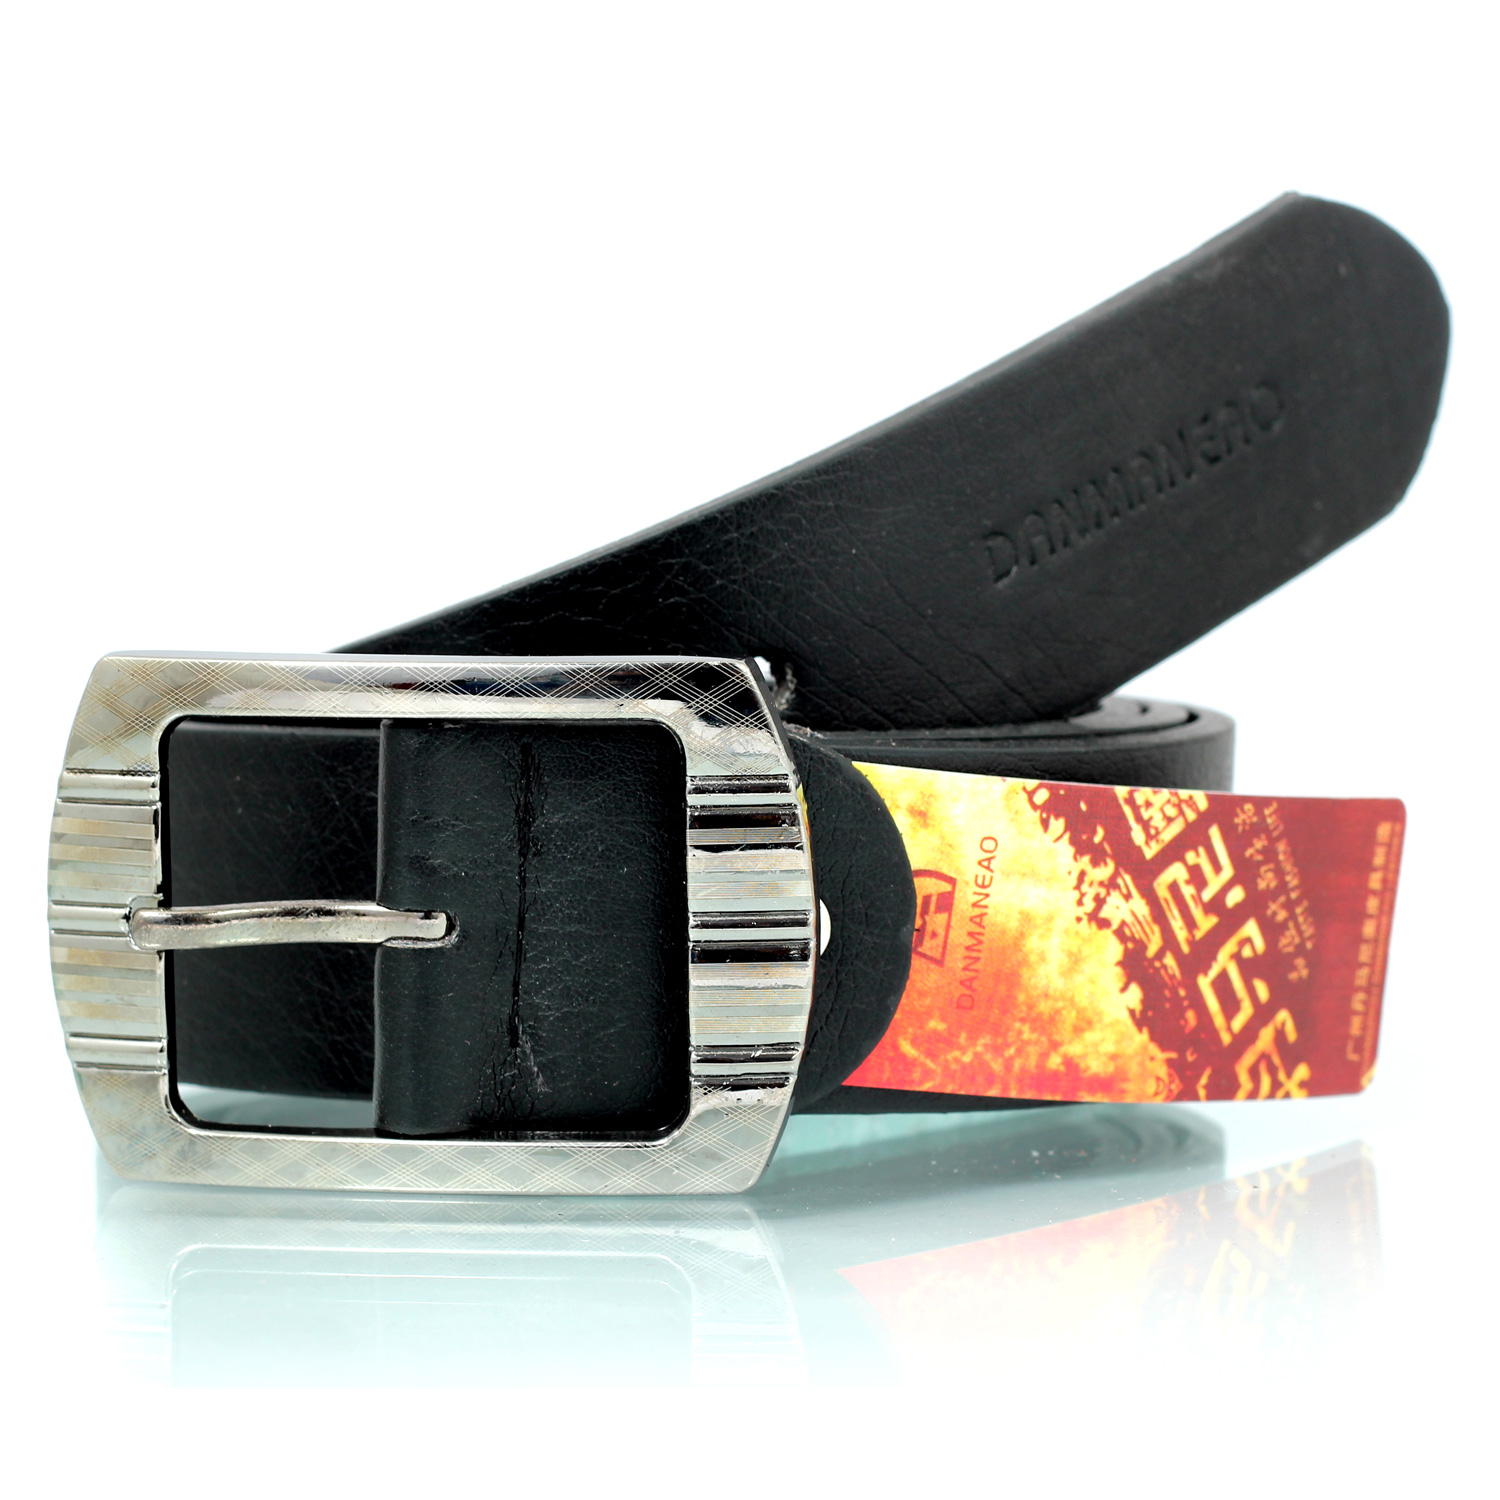 Danmaneao trio metallic strips design single stitched pure leather belts